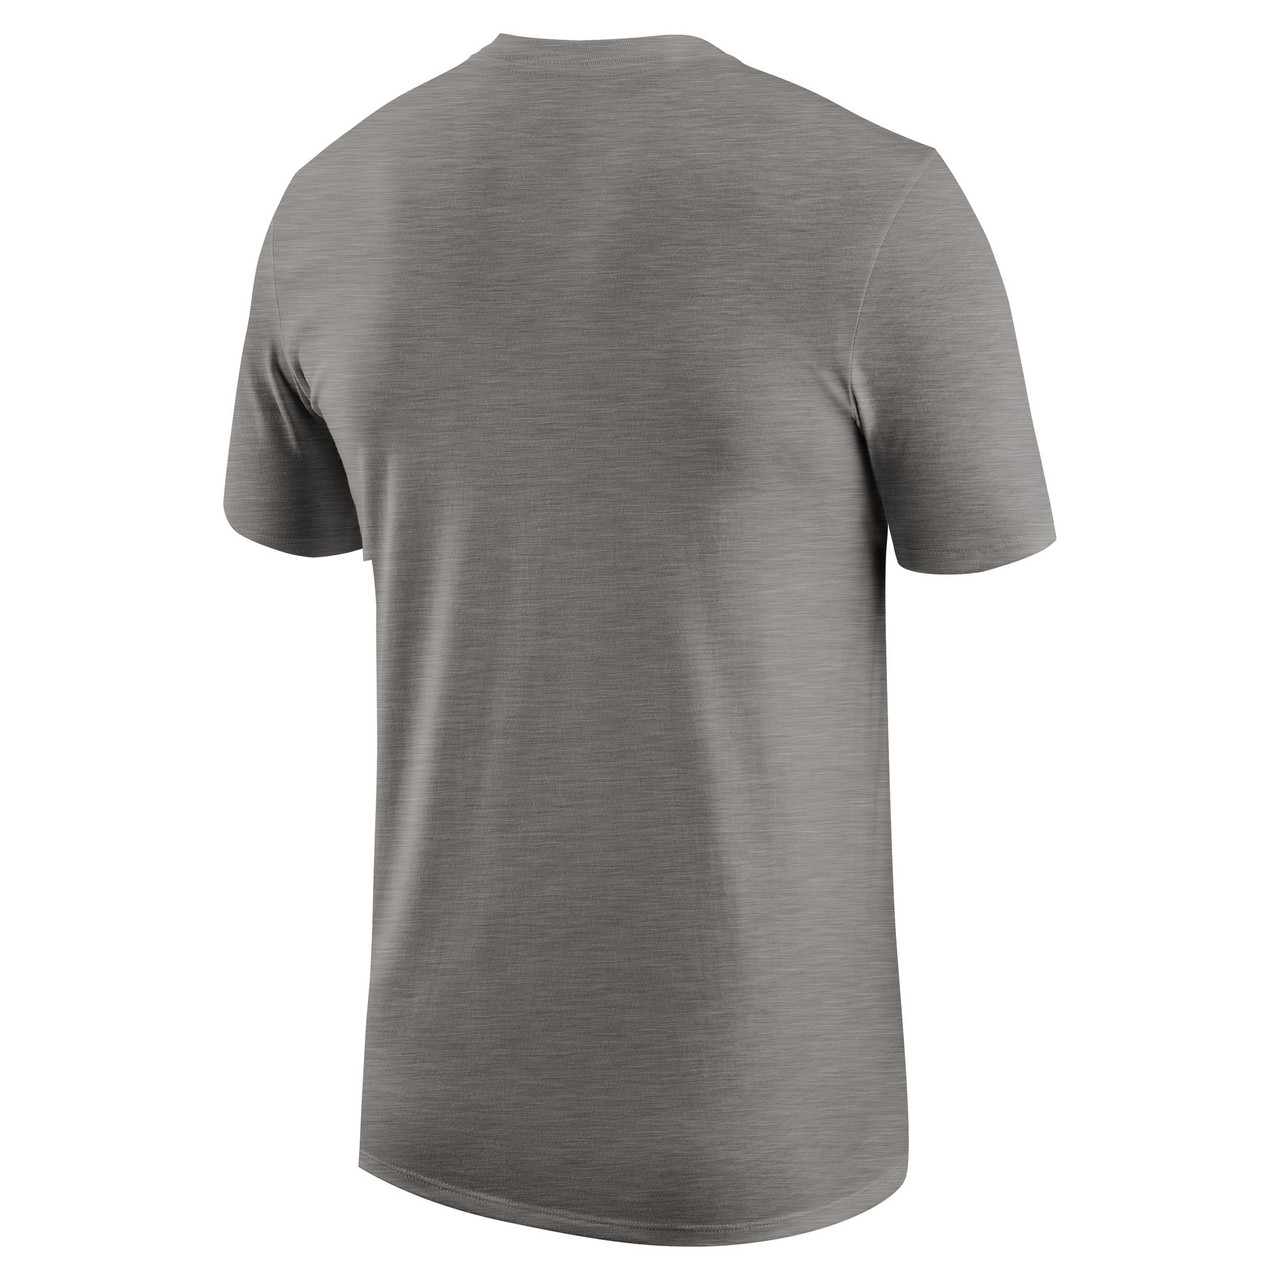 San Antonio Spurs Men's Nike Jordan T-Shirt - Gray